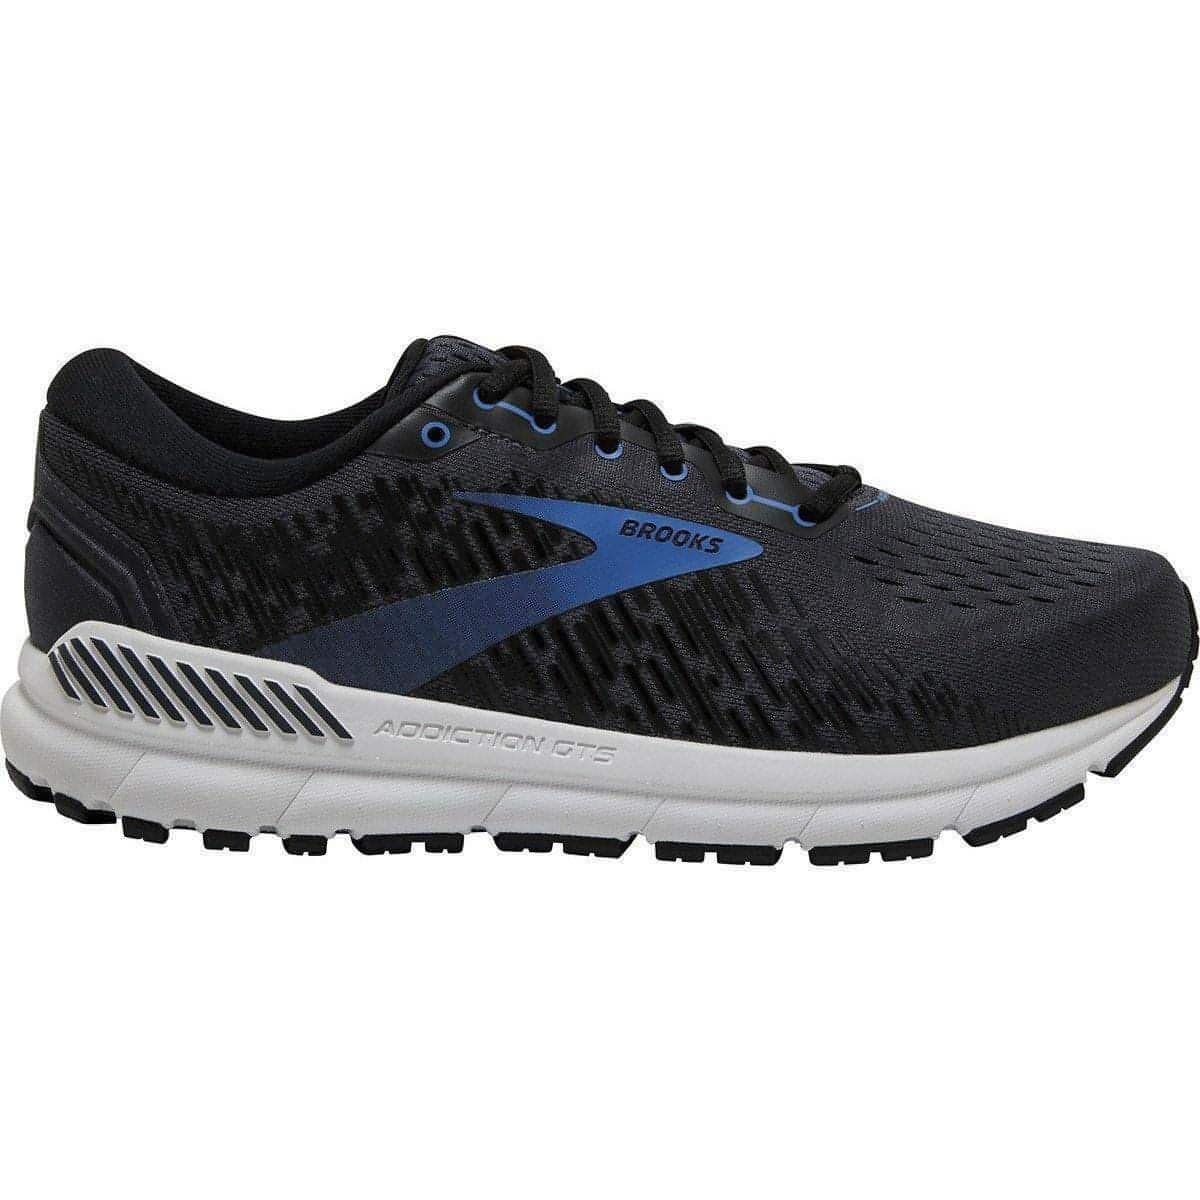 Brooks Addiction GTS 15 Mens Running Shoes - Black 190340941849 - Start Fitness